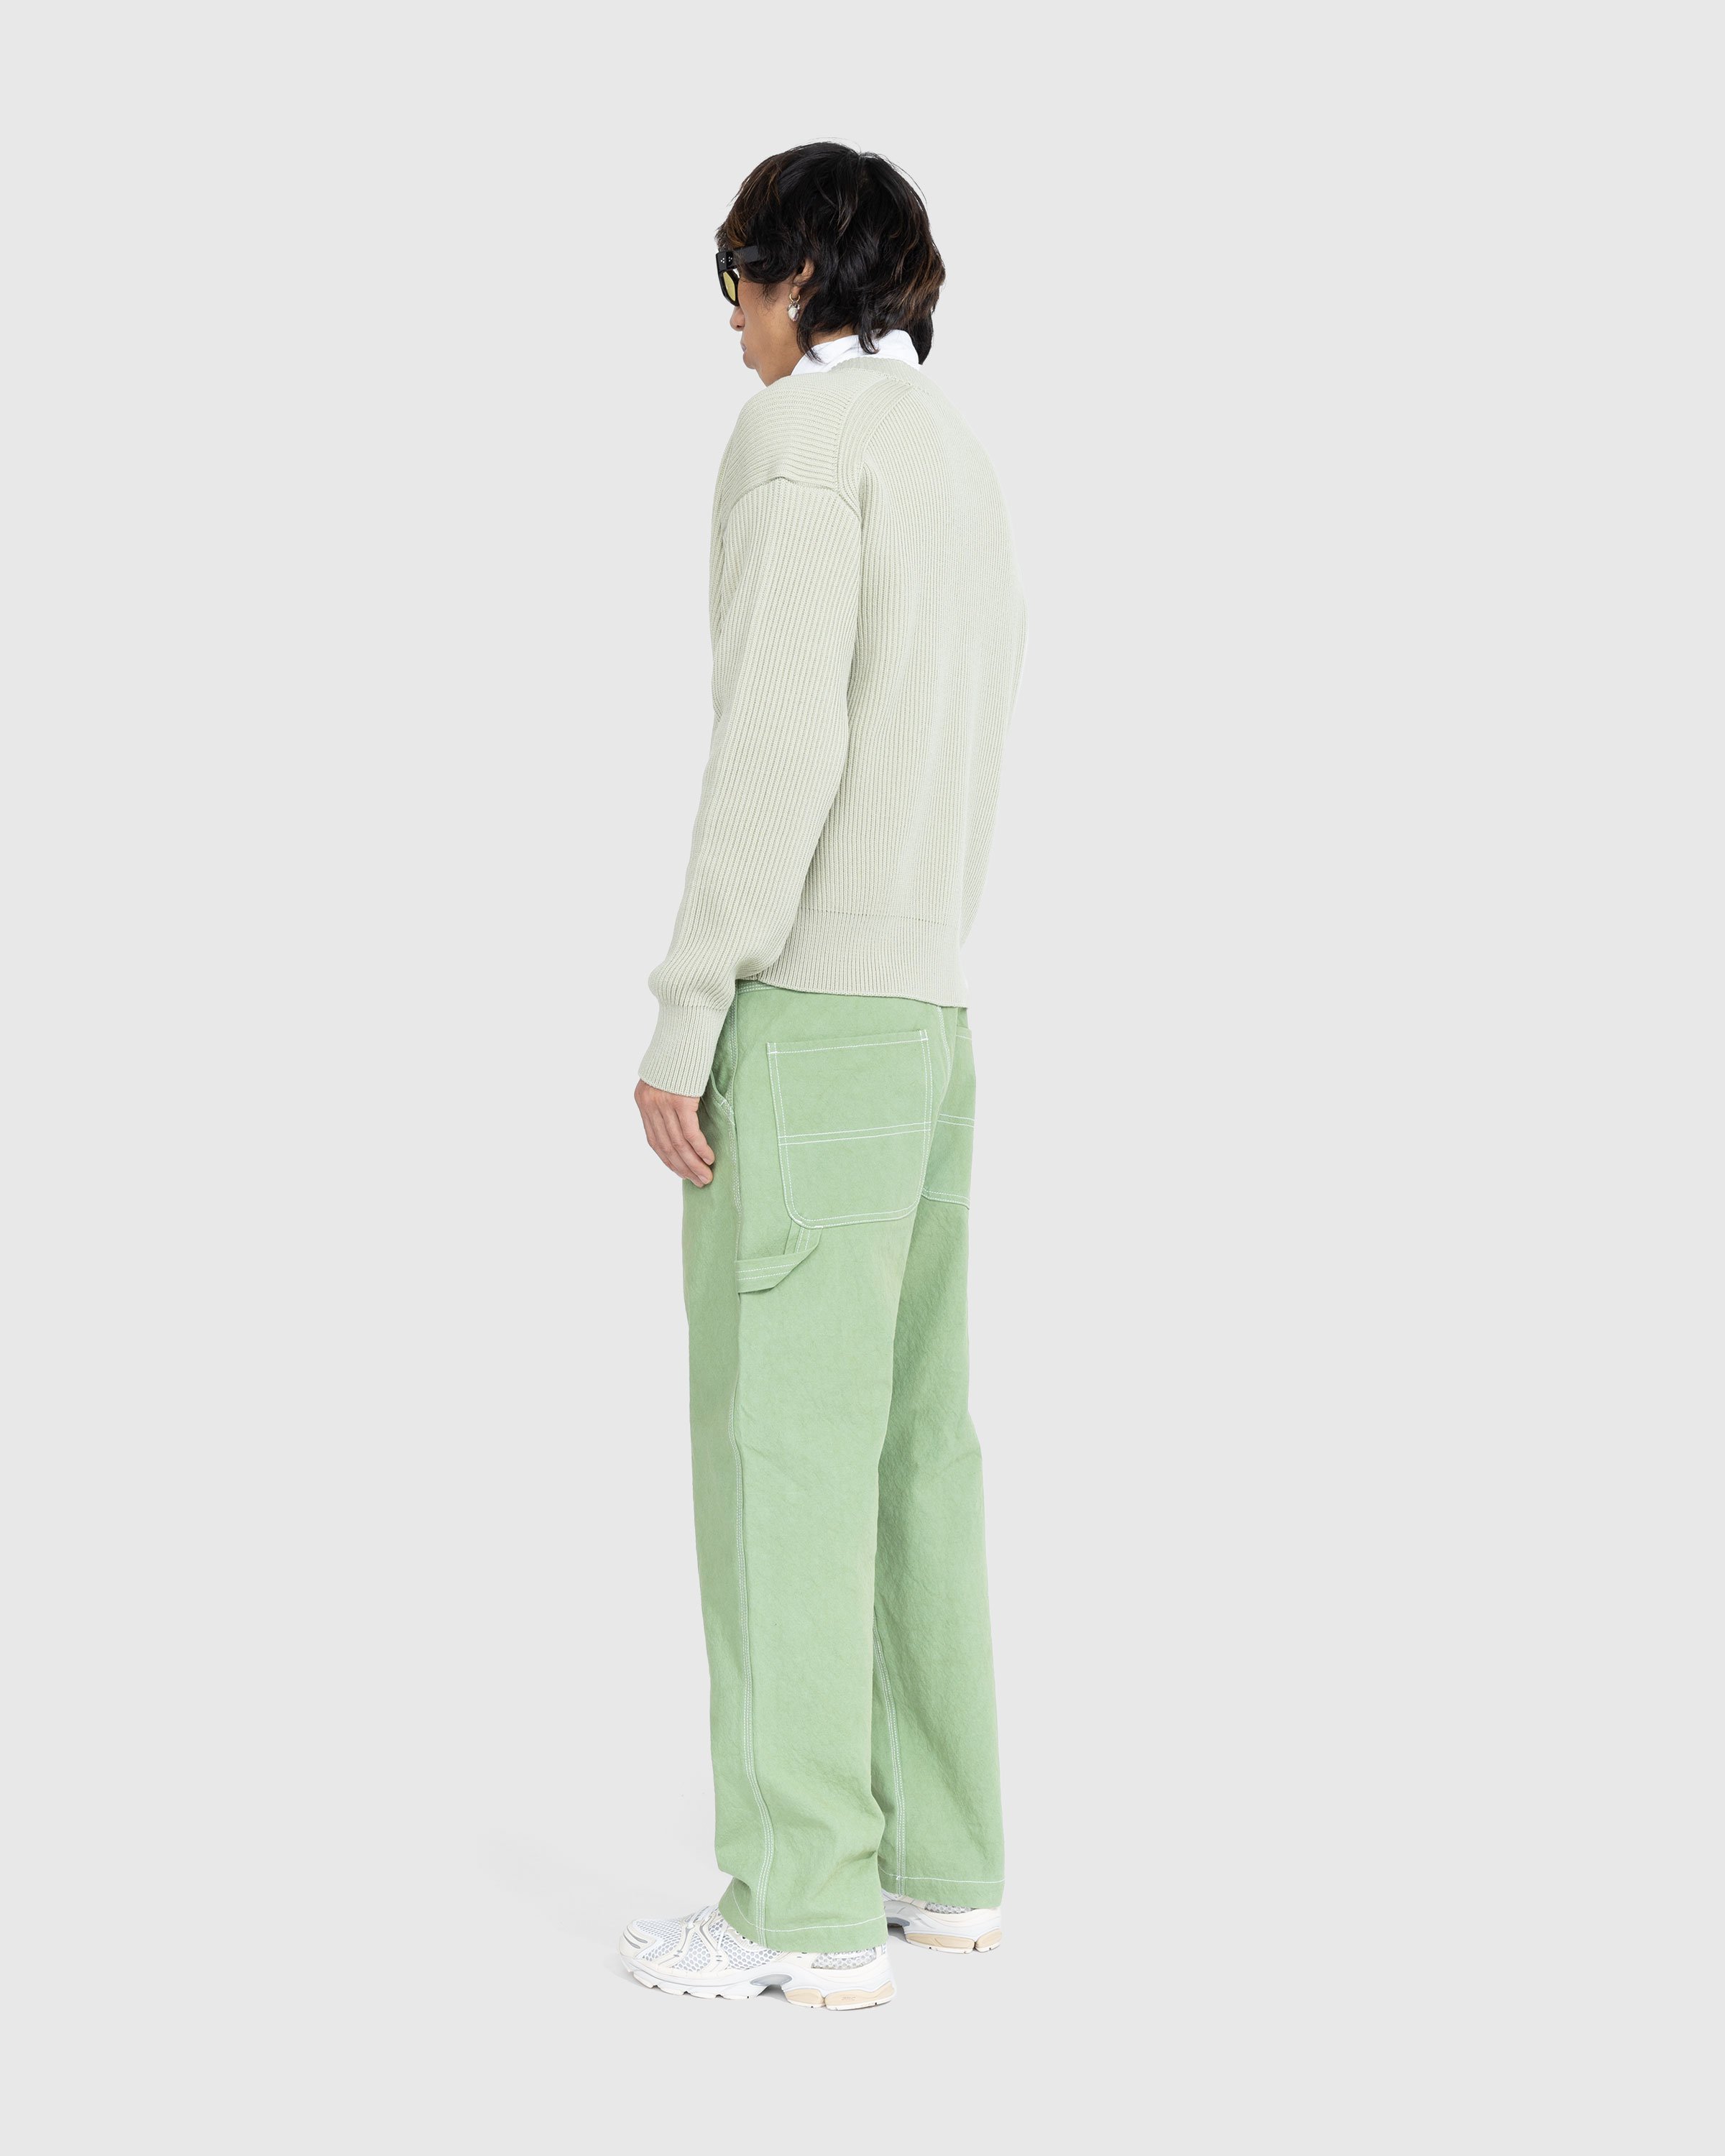 Auralee - French Merino Rib Knit Cardigan Light Khaki - Clothing - Green - Image 4